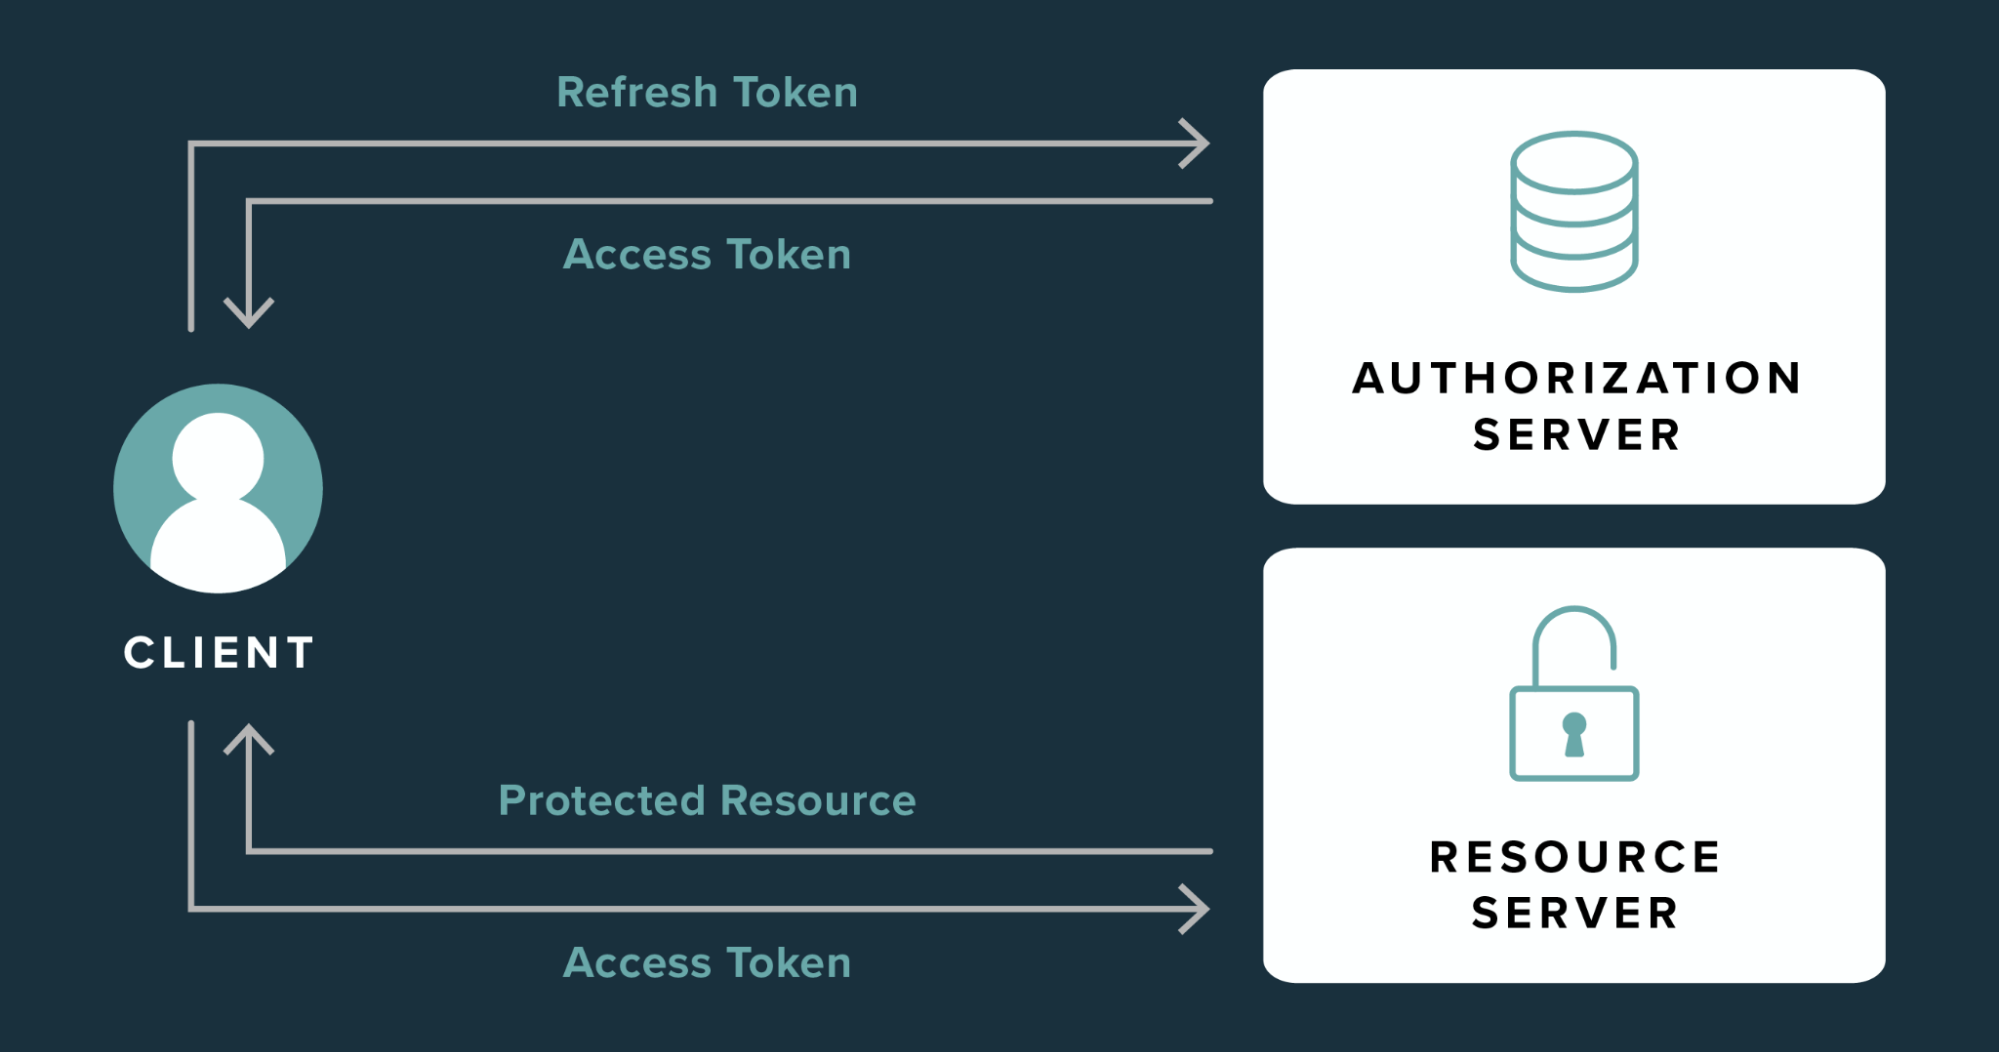 Cơ chế refresh token cho API request